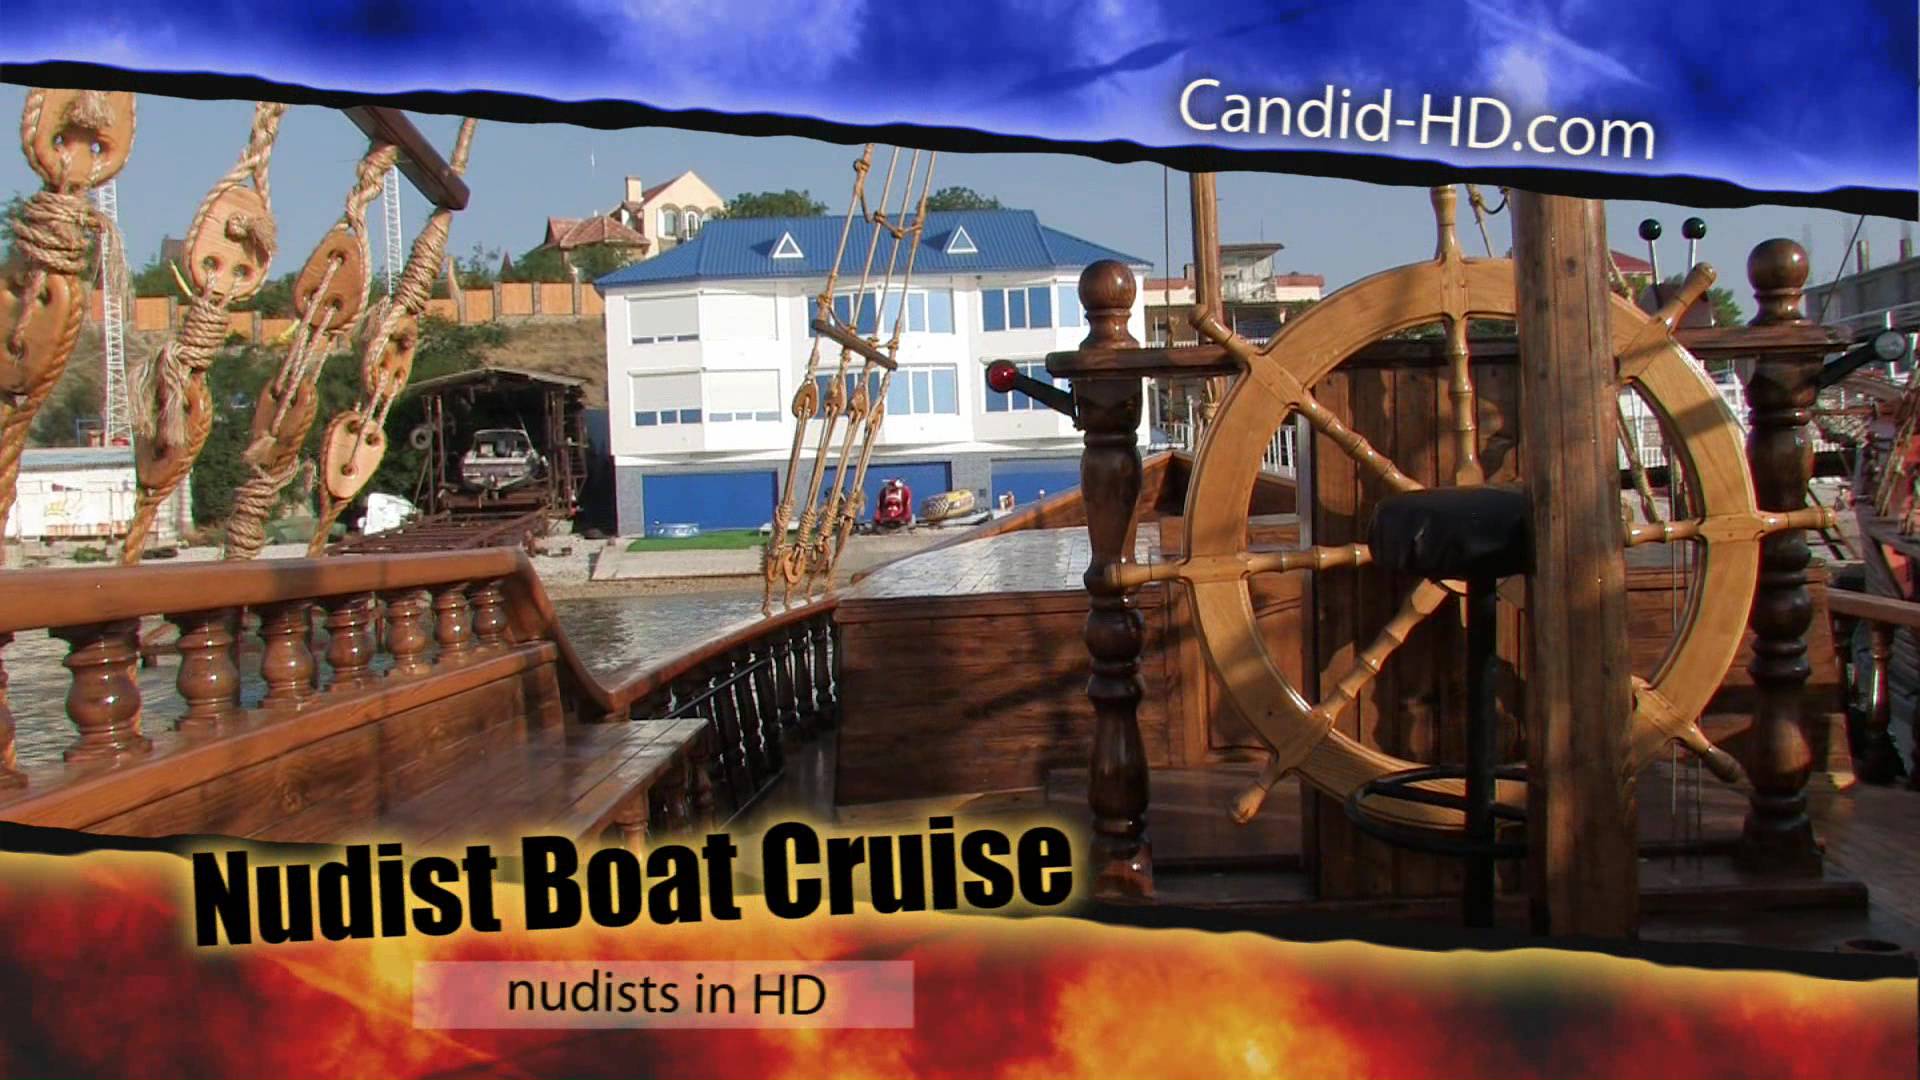 Candid-HD.com Nudist Boat Cruise - Poster